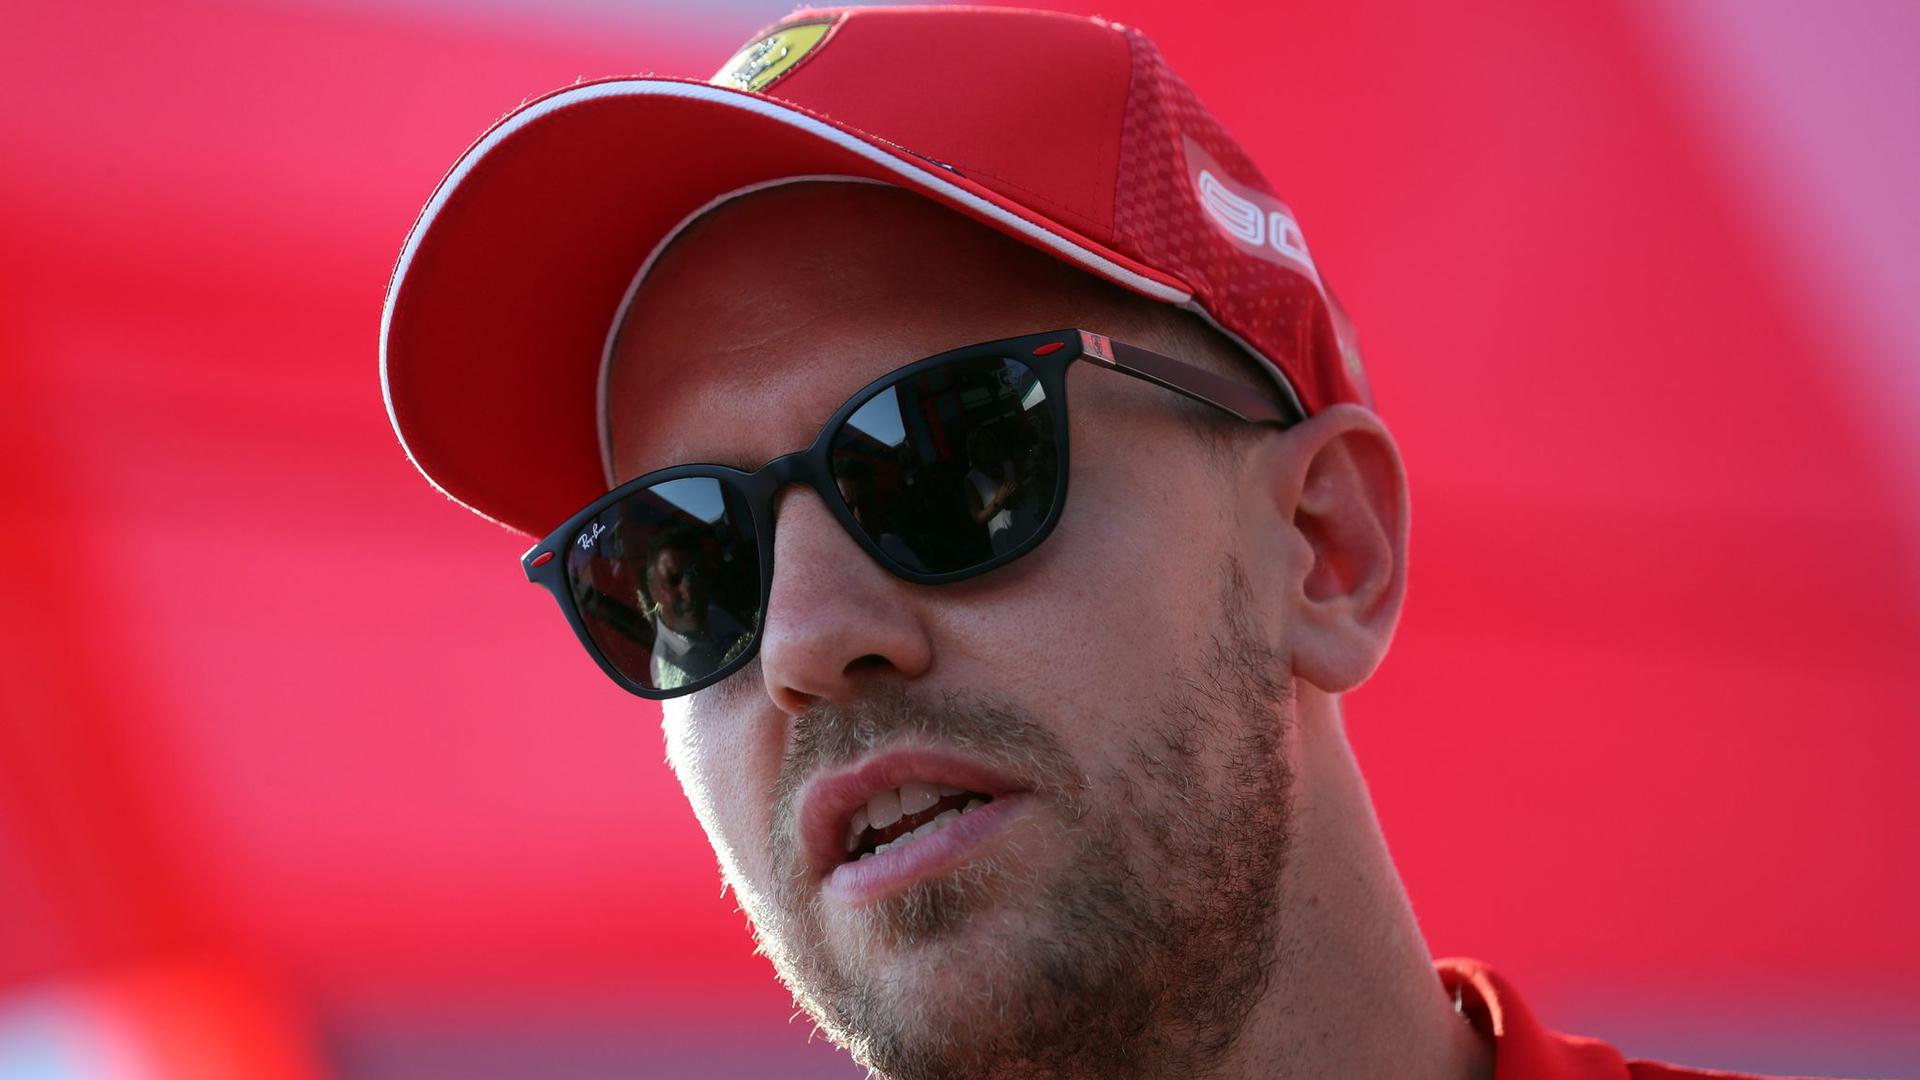 Braucht unbedingt einen Erfolg: Sebastian Vettel.